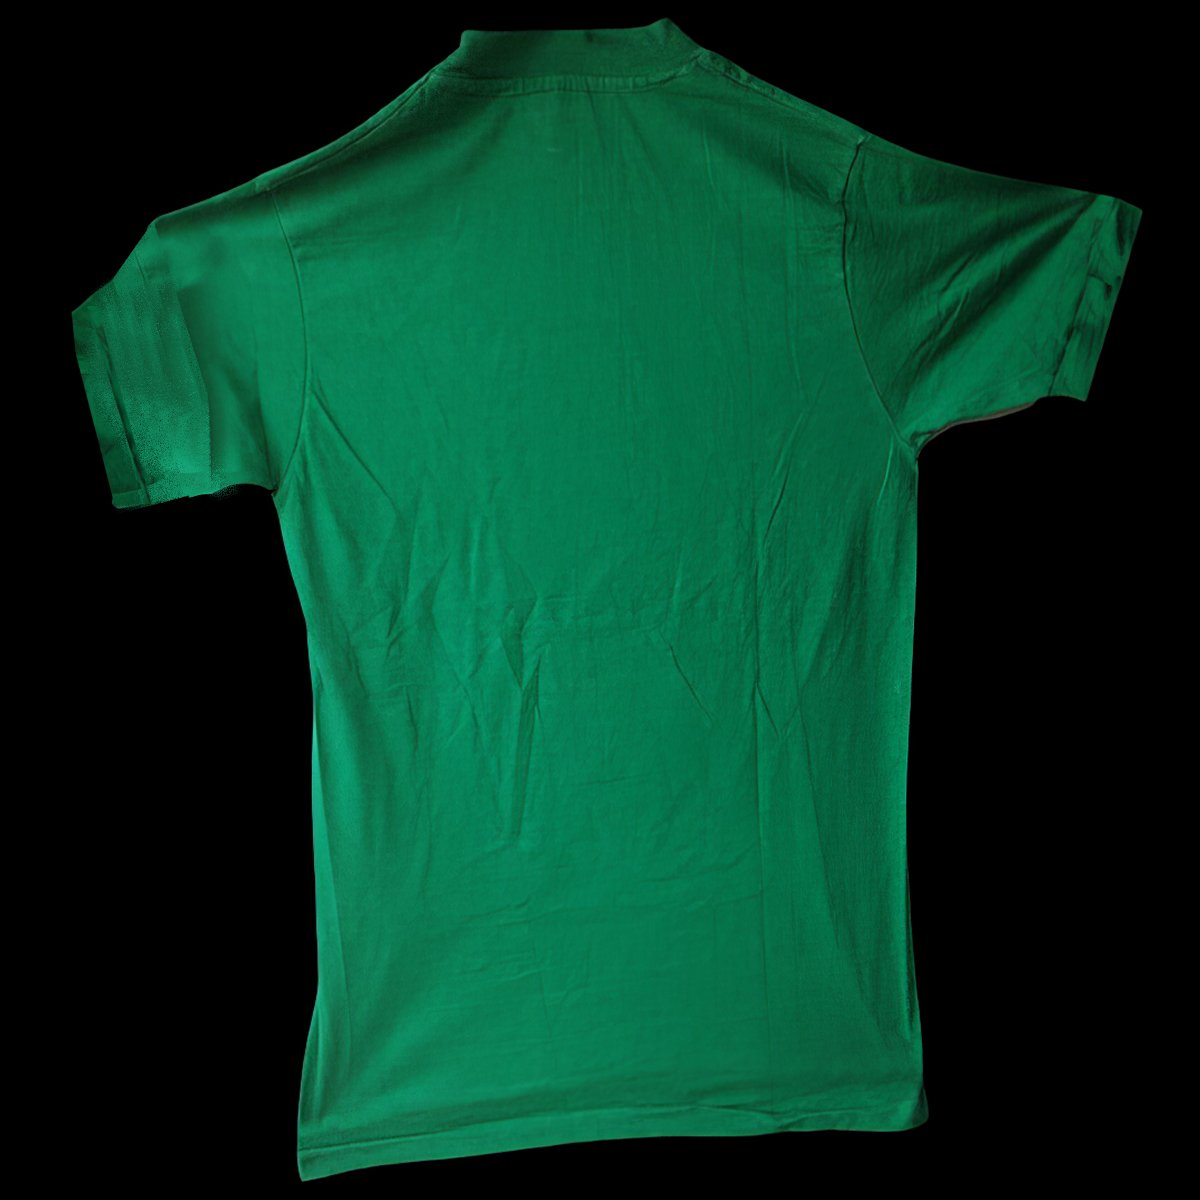 Stevie Ray Vaughan 1981 T-Shirt